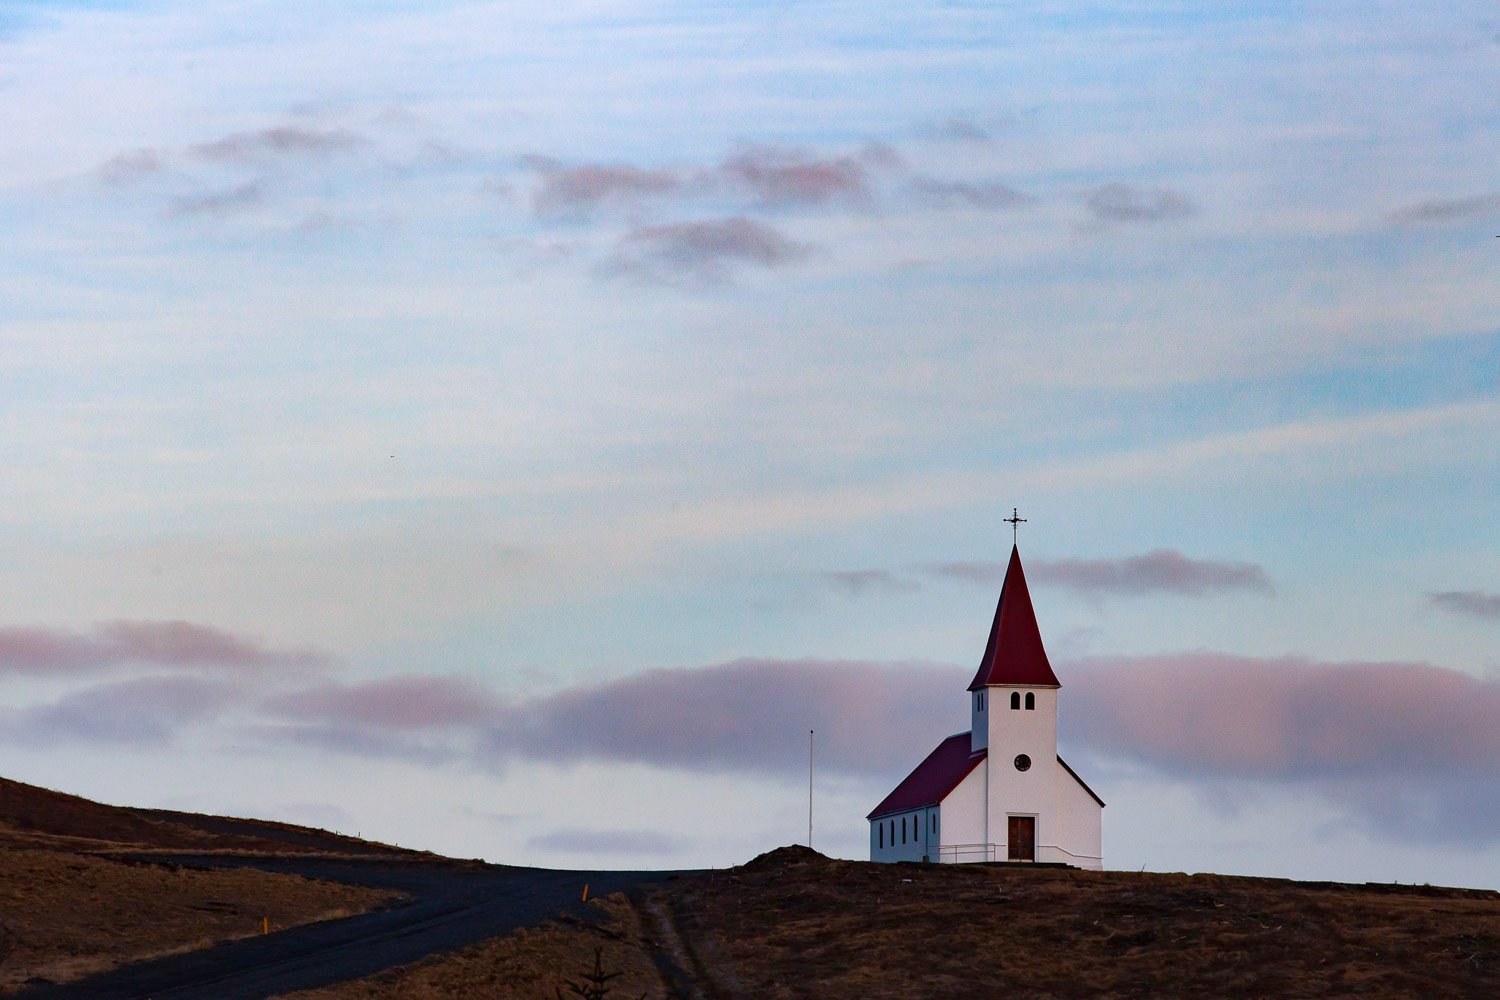 A beautiful tower long away on a greeny mountain peak, Iceland #26